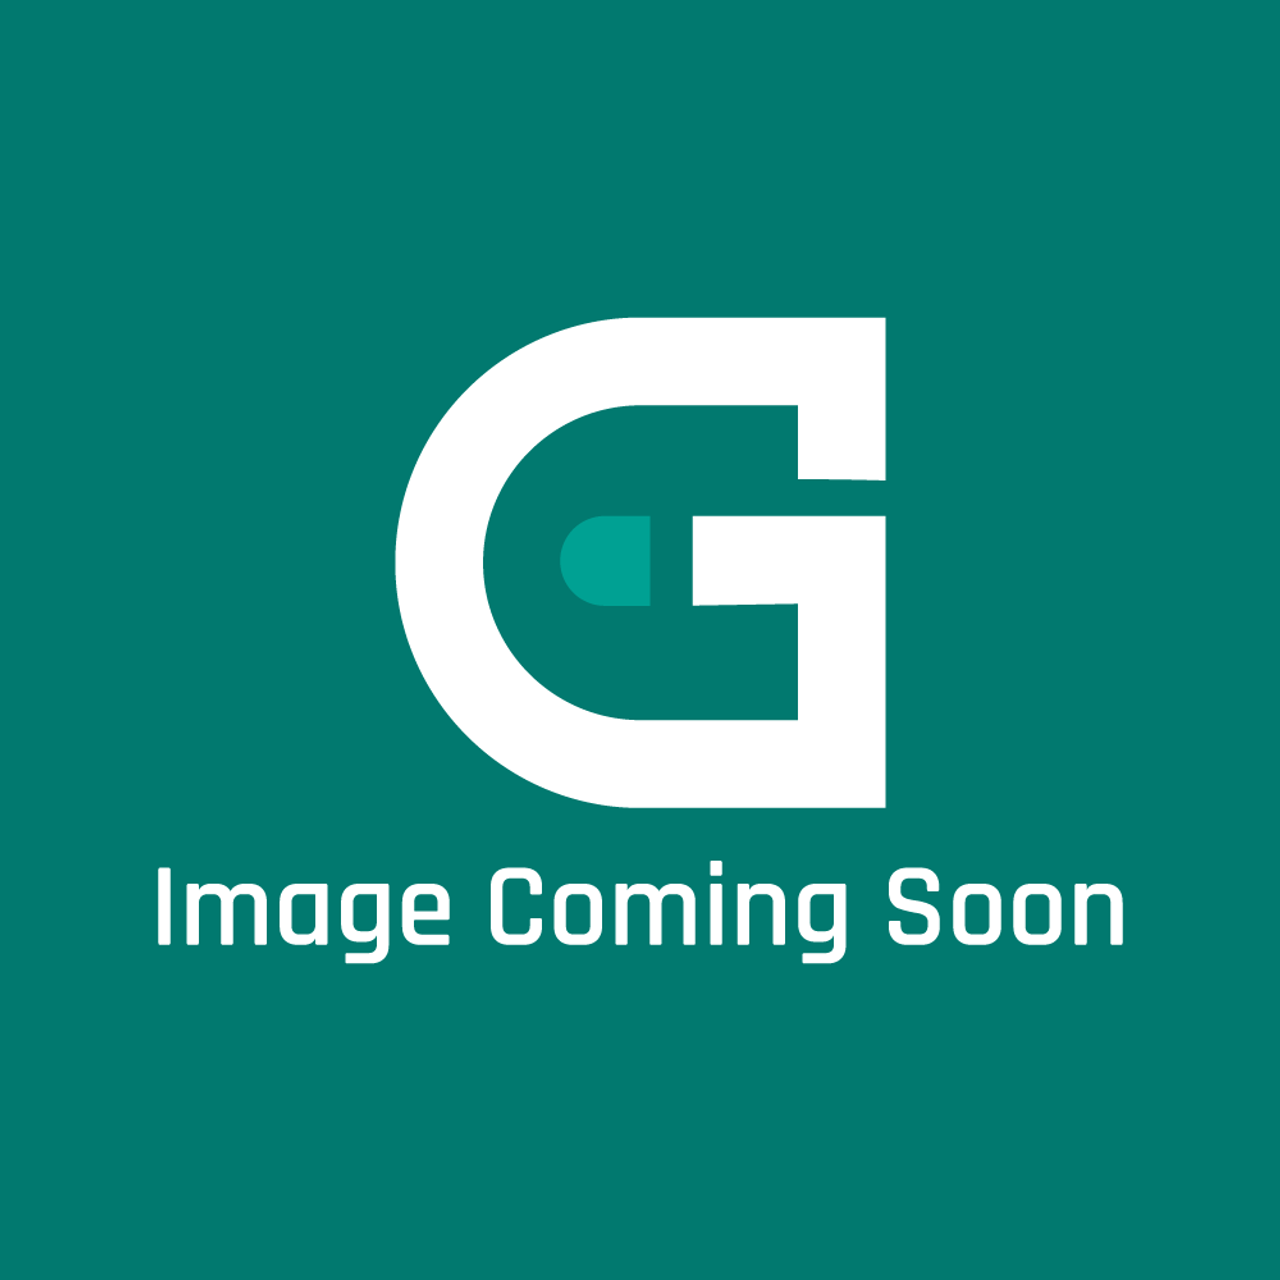 Frigidaire - Electrolux 5304436666 5Semirigid C10 Bul - Image Coming Soon!